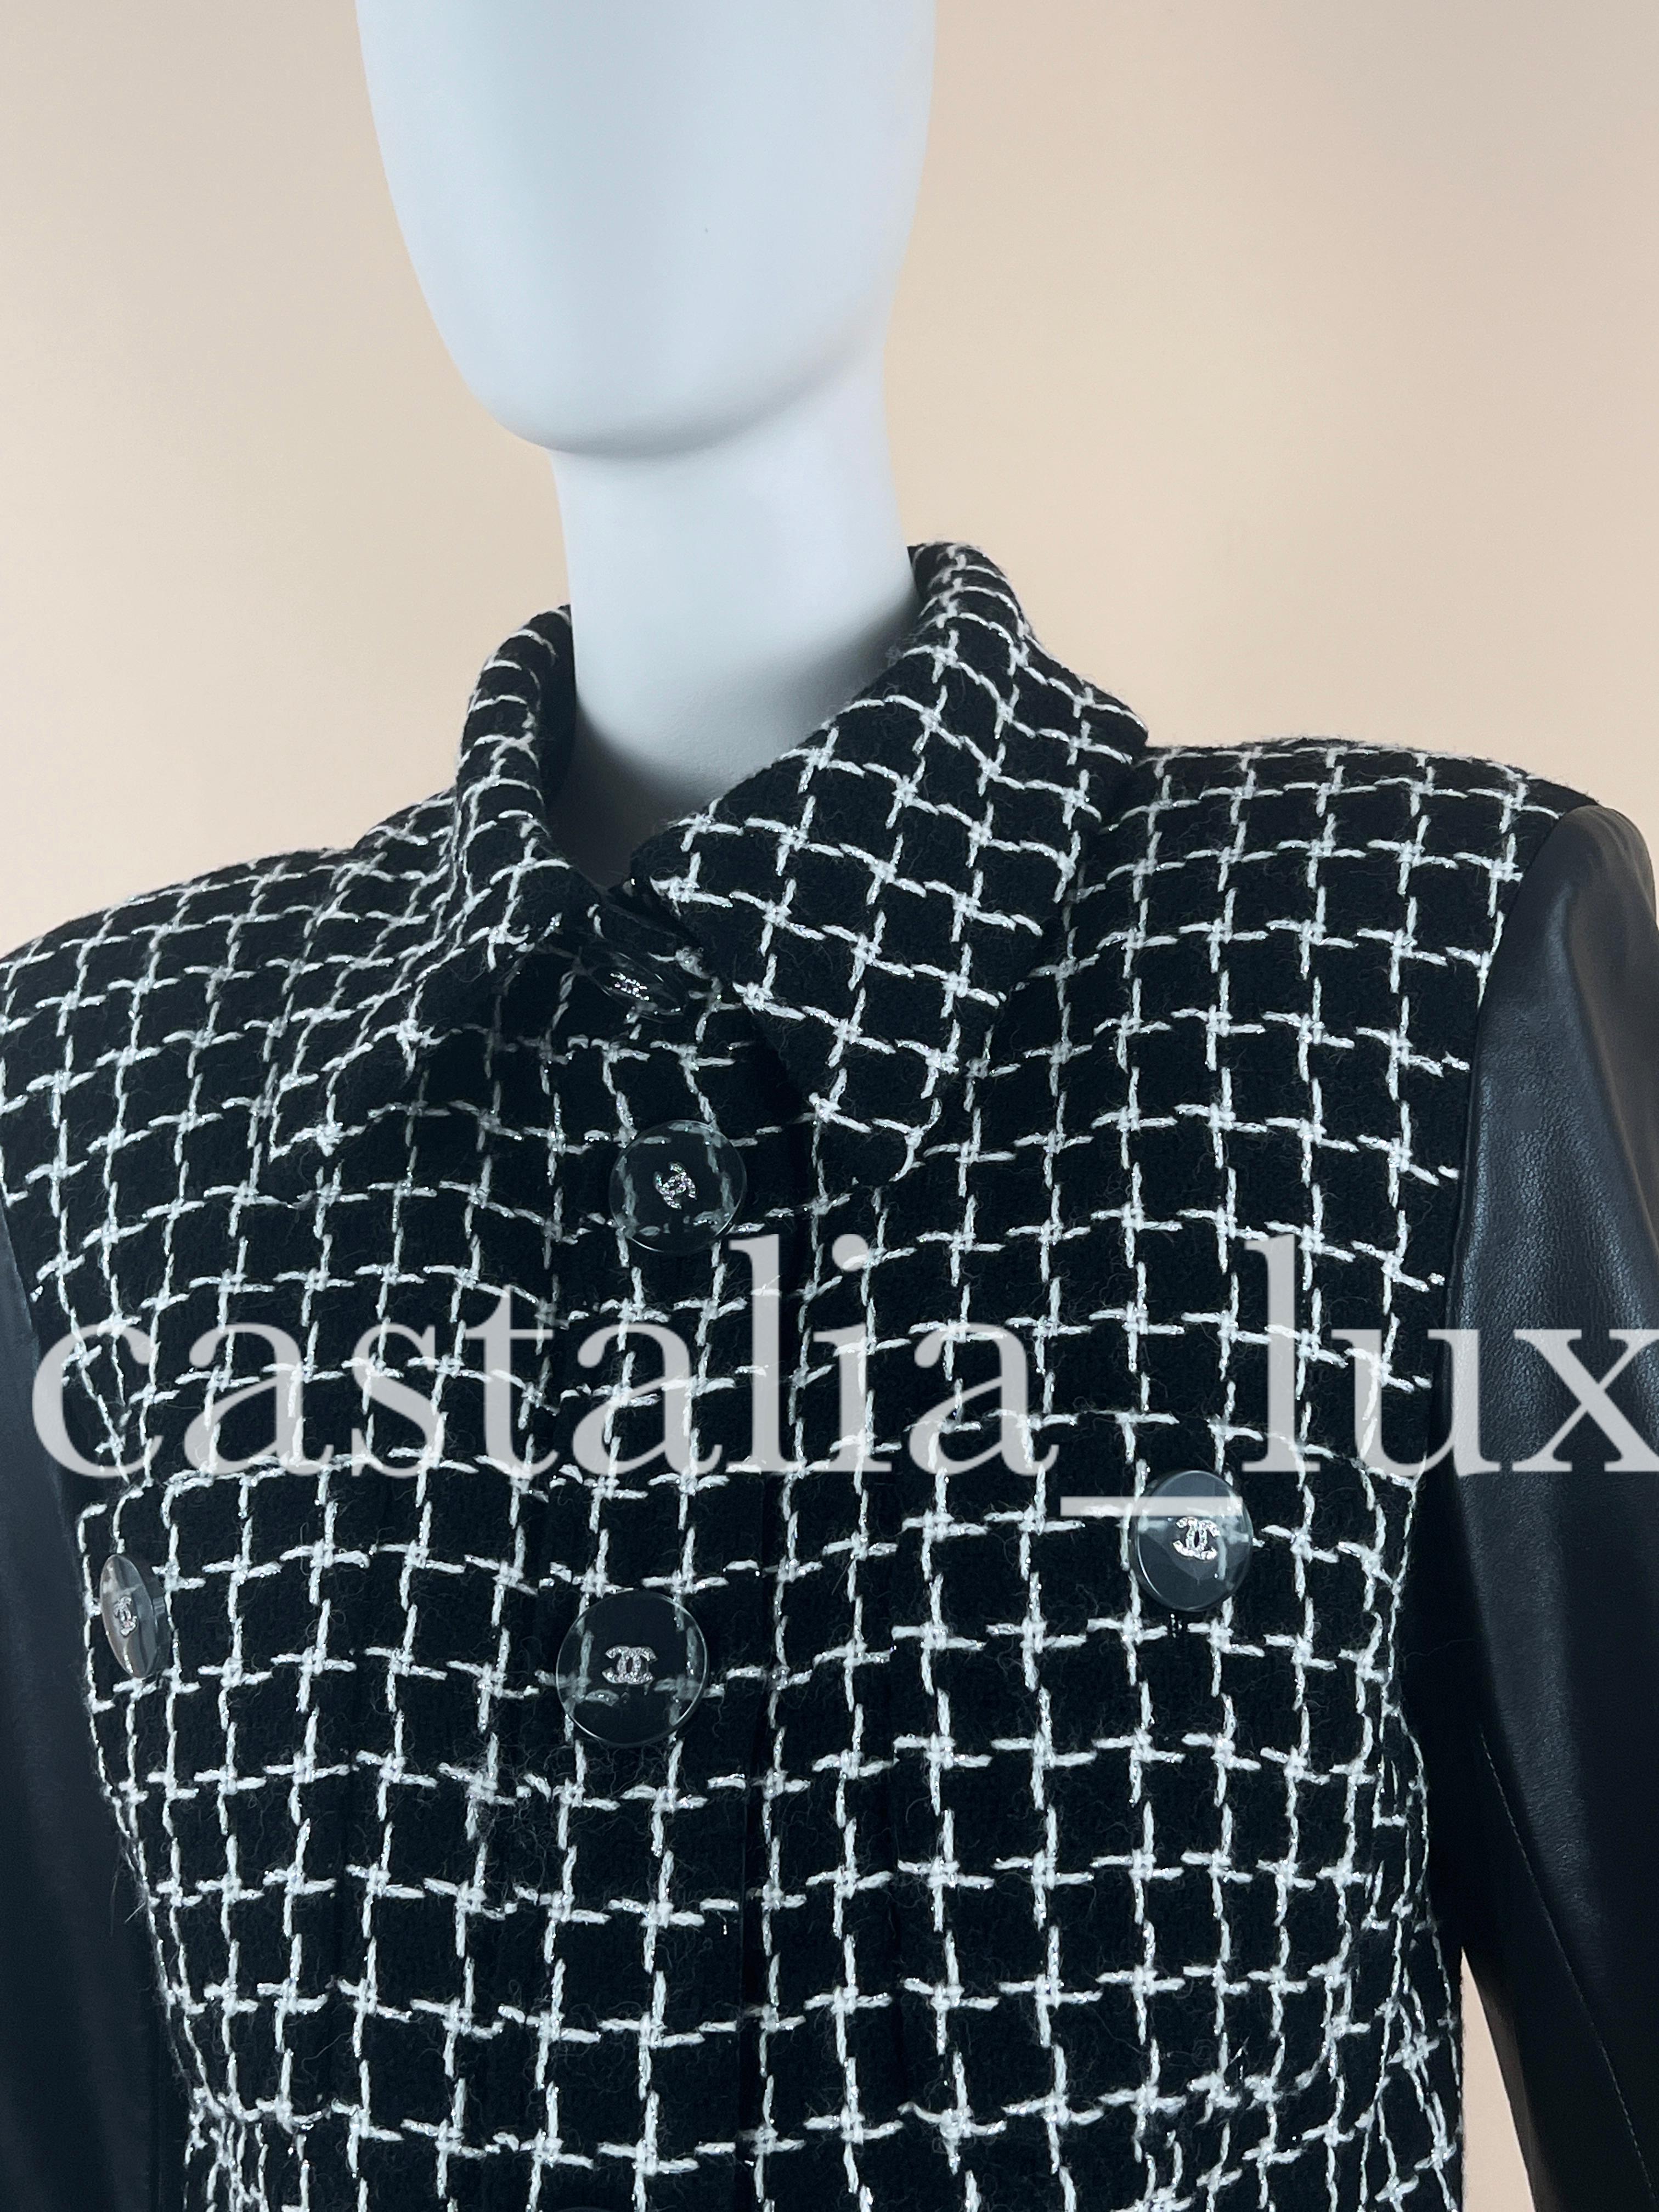 Chanel Paris / Cosmopolite Runway Jacket For Sale 2